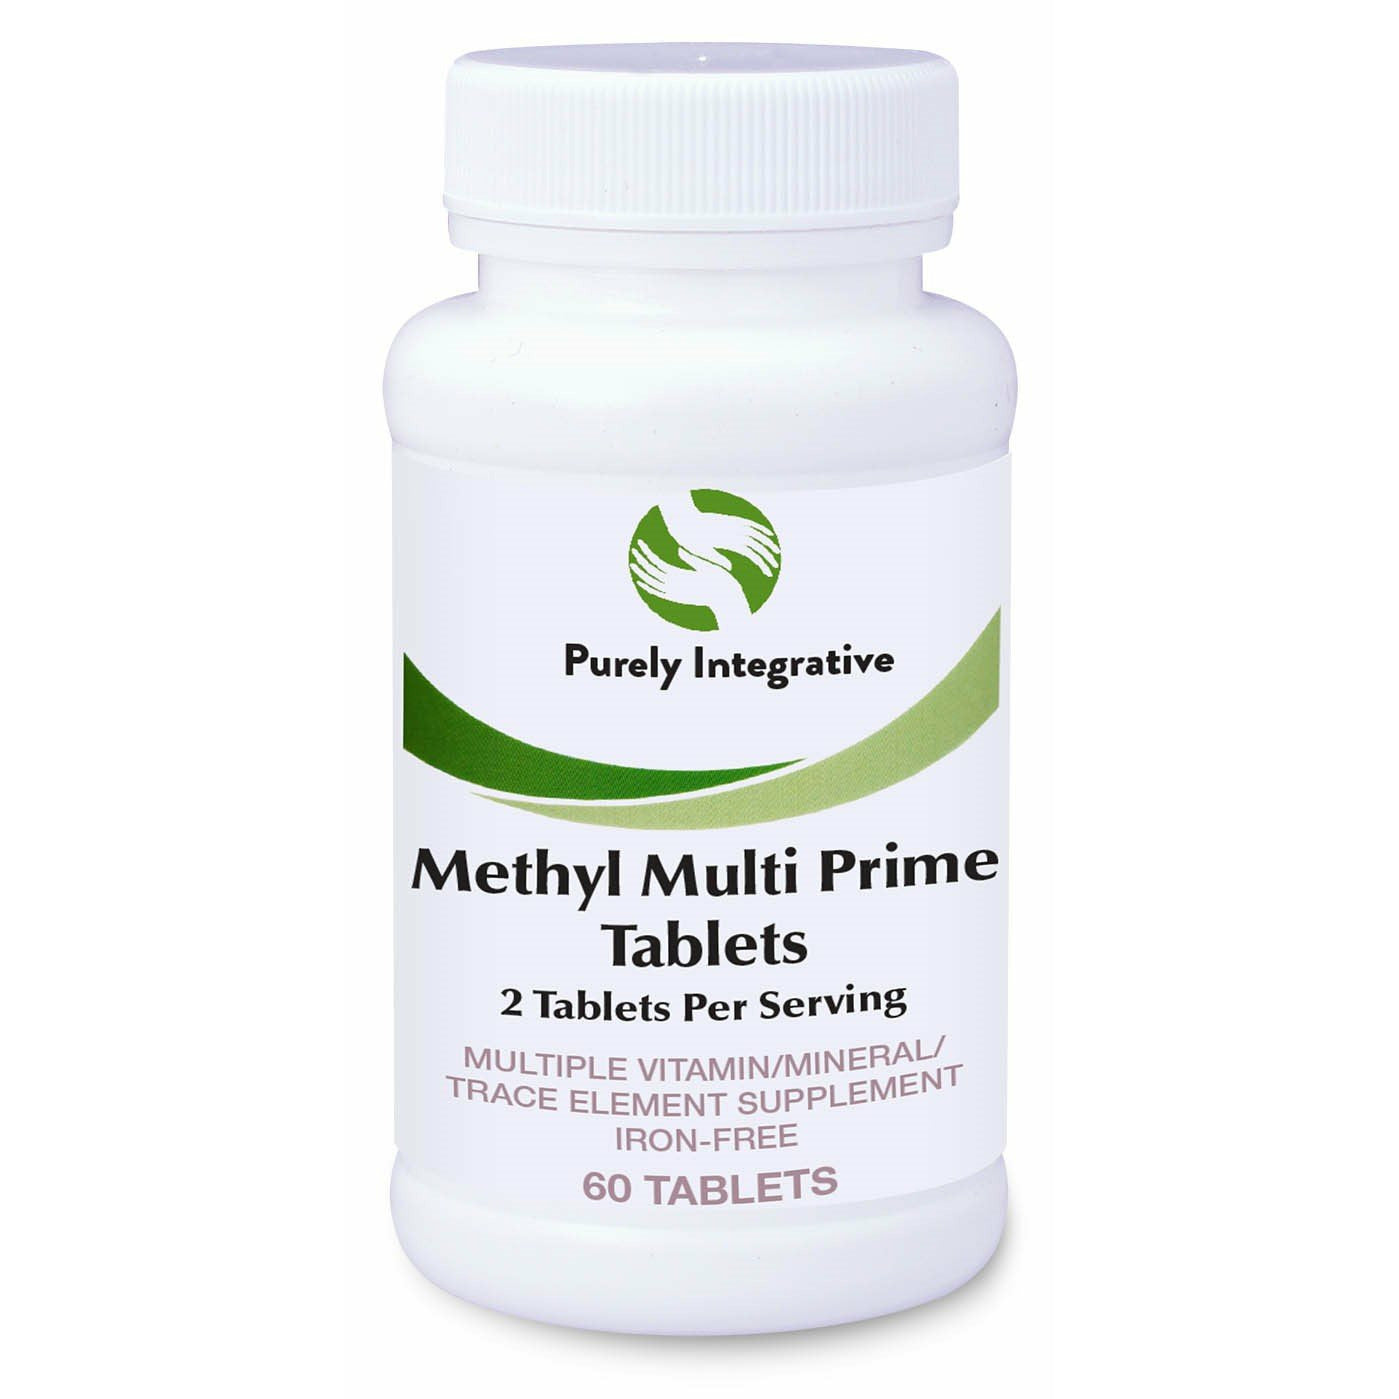 Methyl Multi Prime Tablets 60